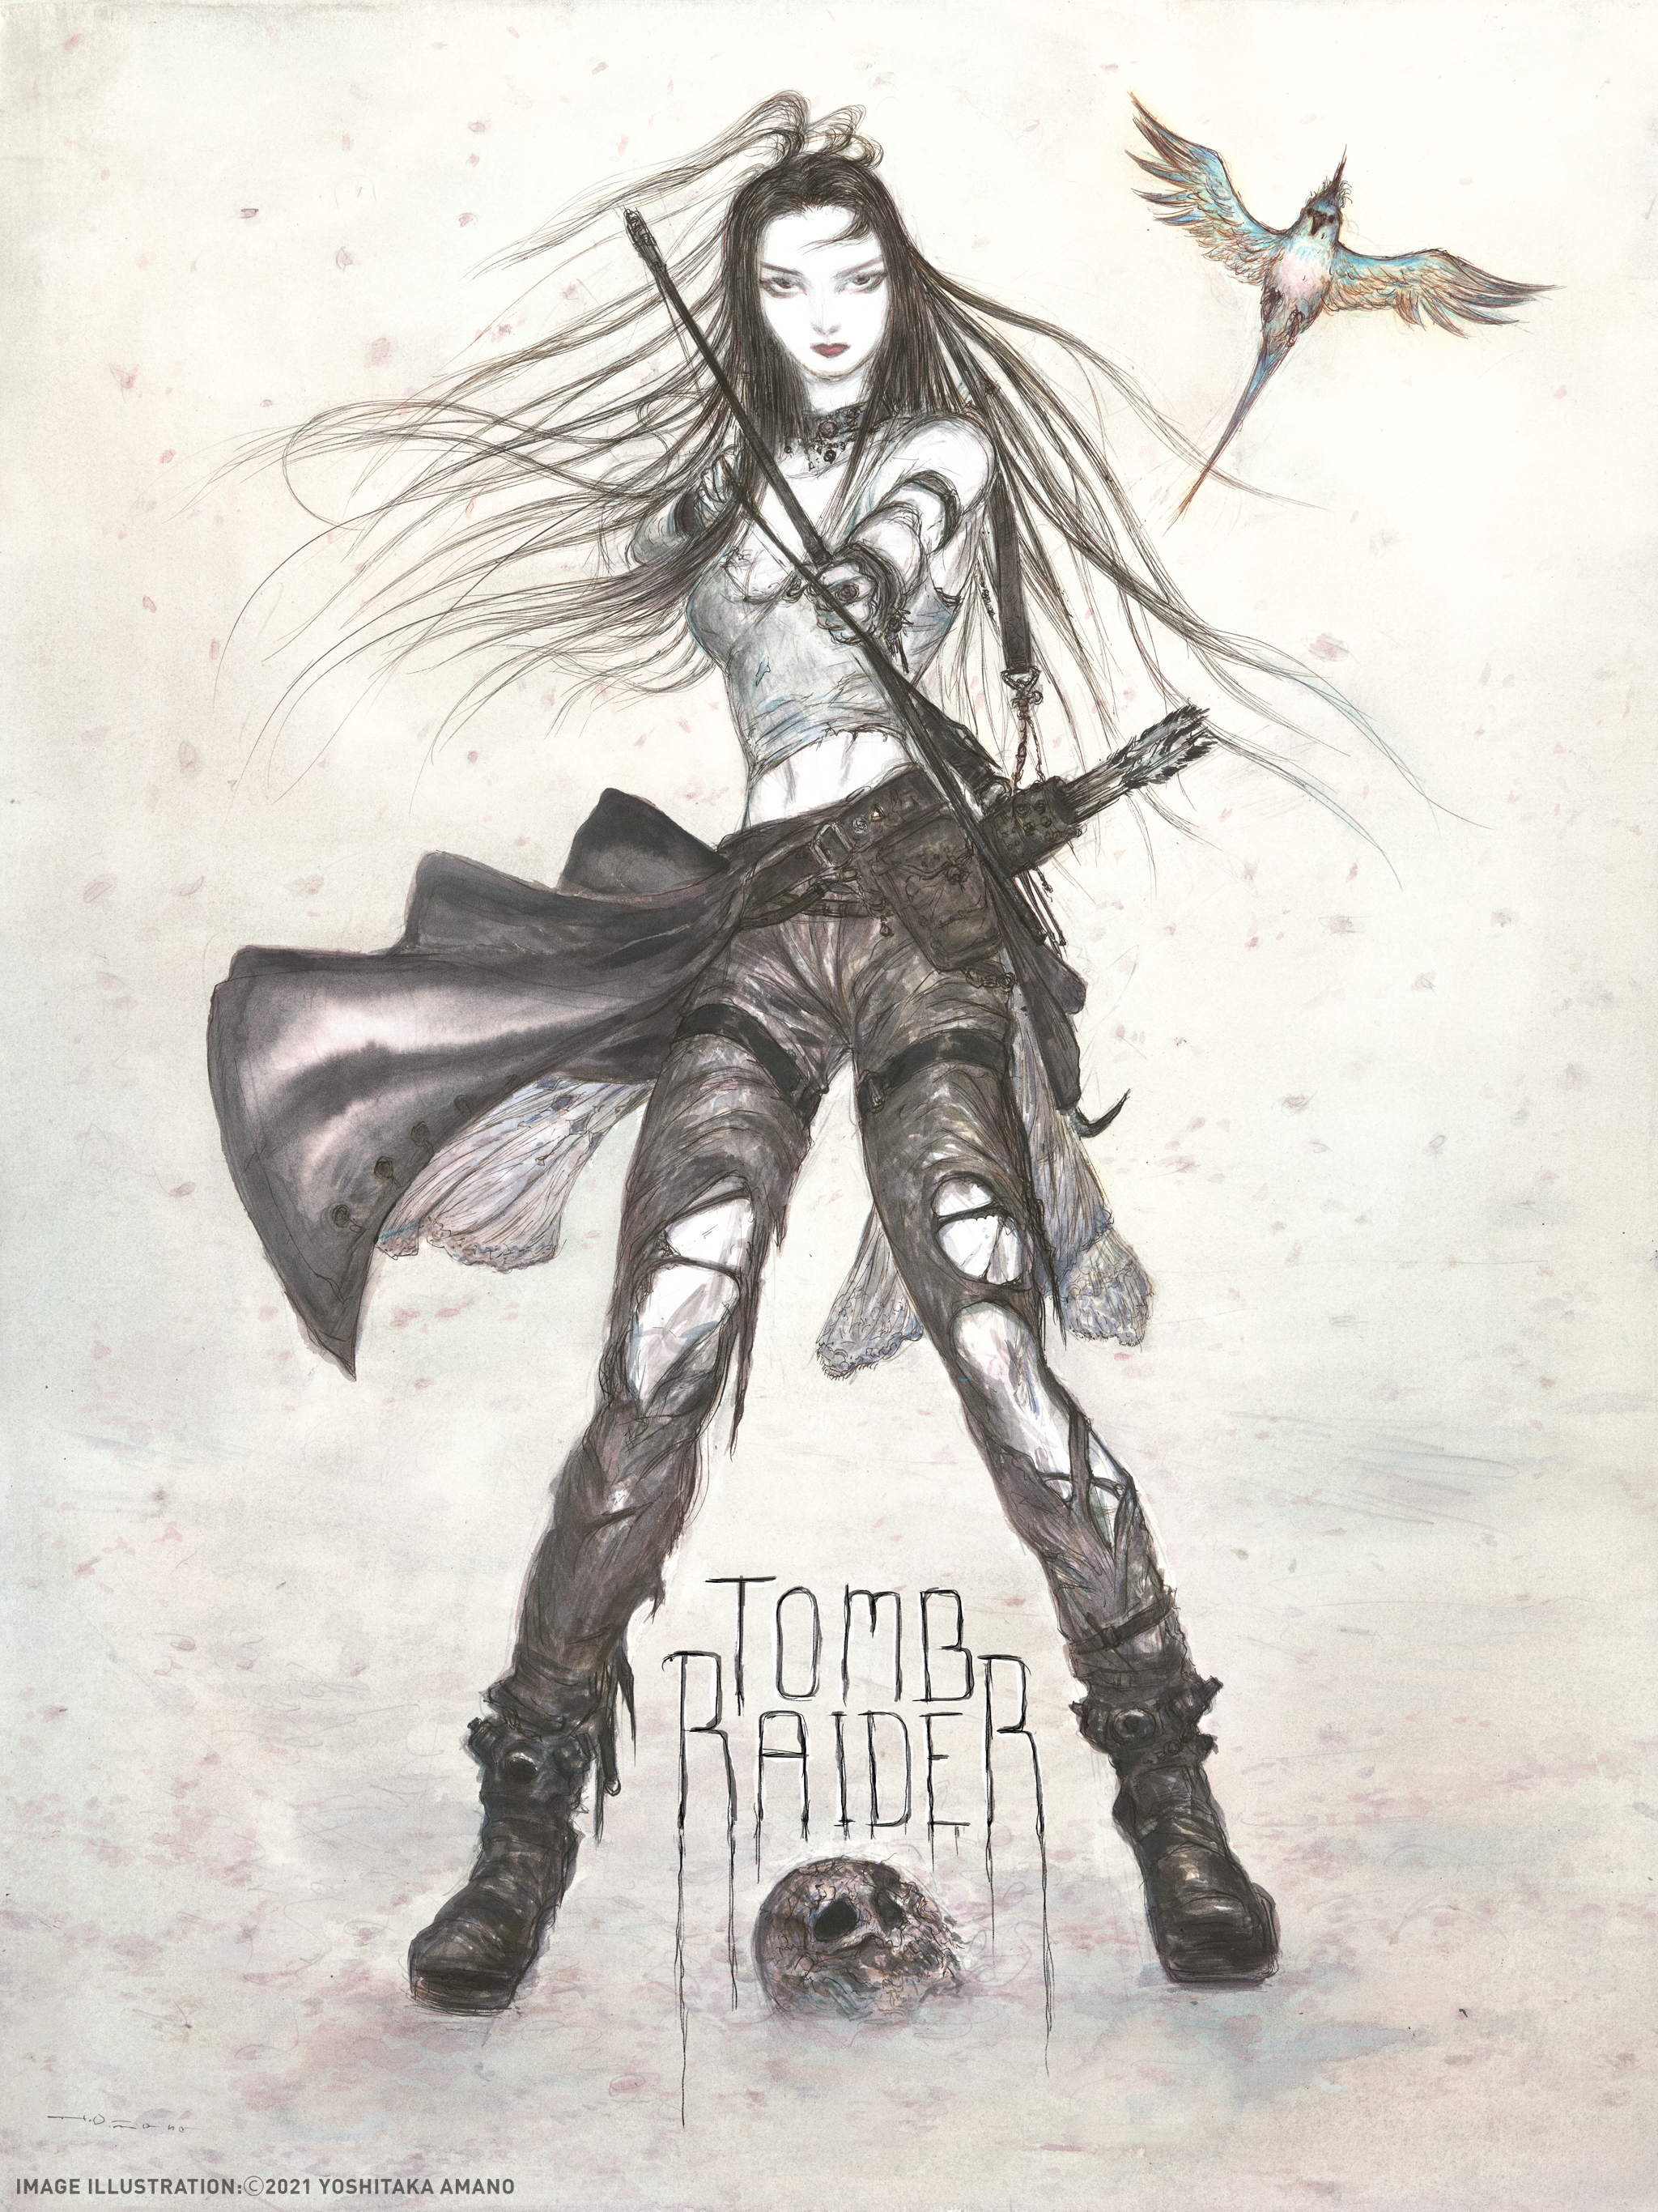 Seni peringatan Tomb Raider: Tomb Raider (2013) oleh Yoshitaka Amano